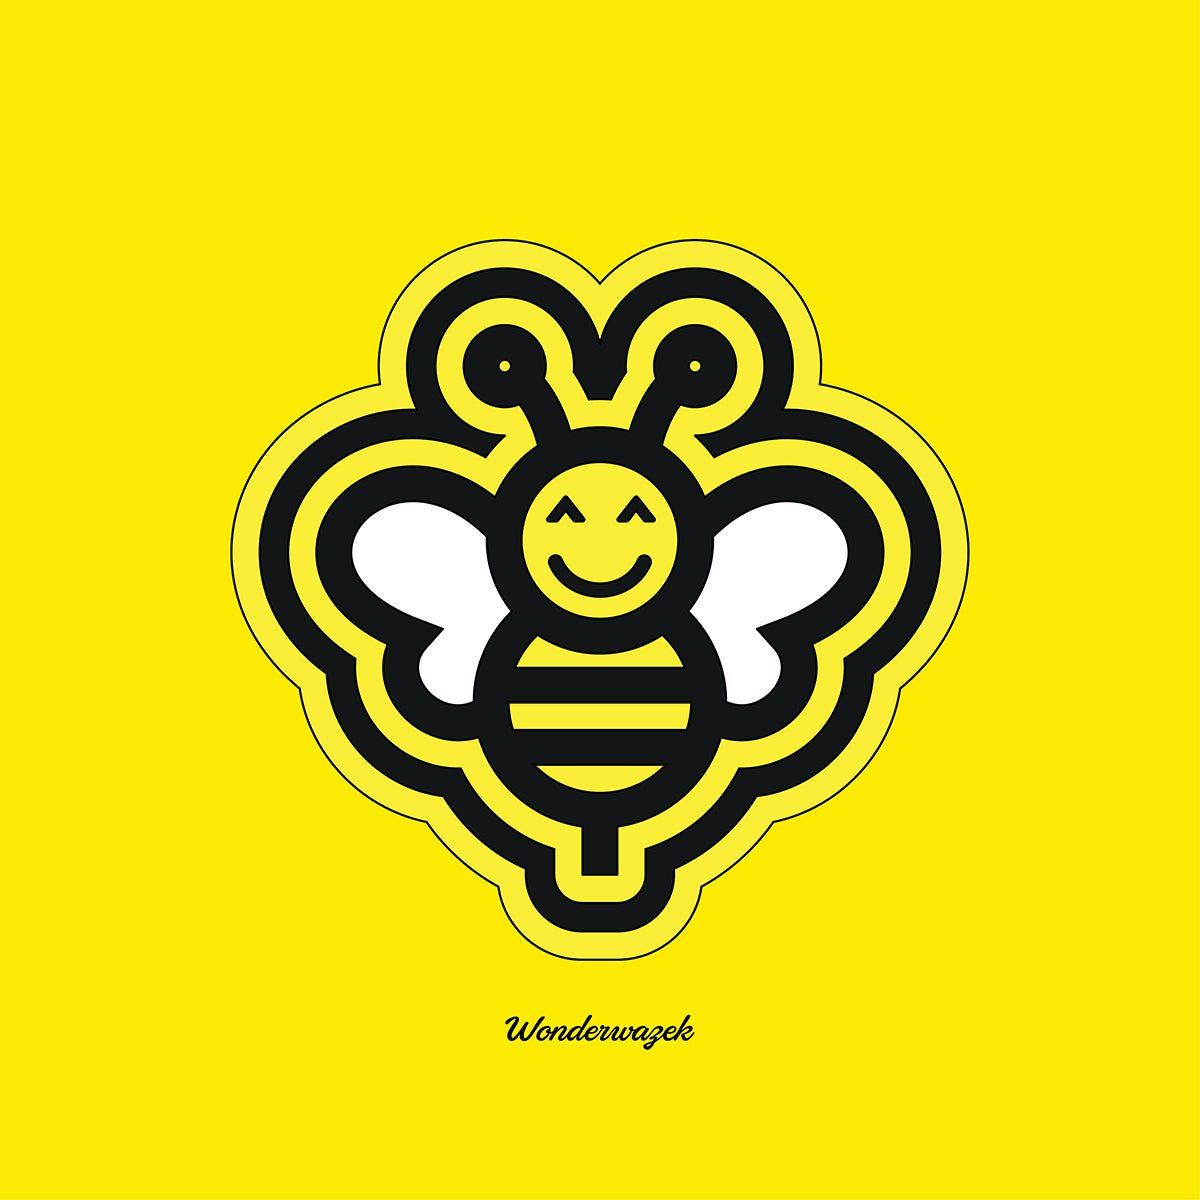 Bienen | Wonderwazek